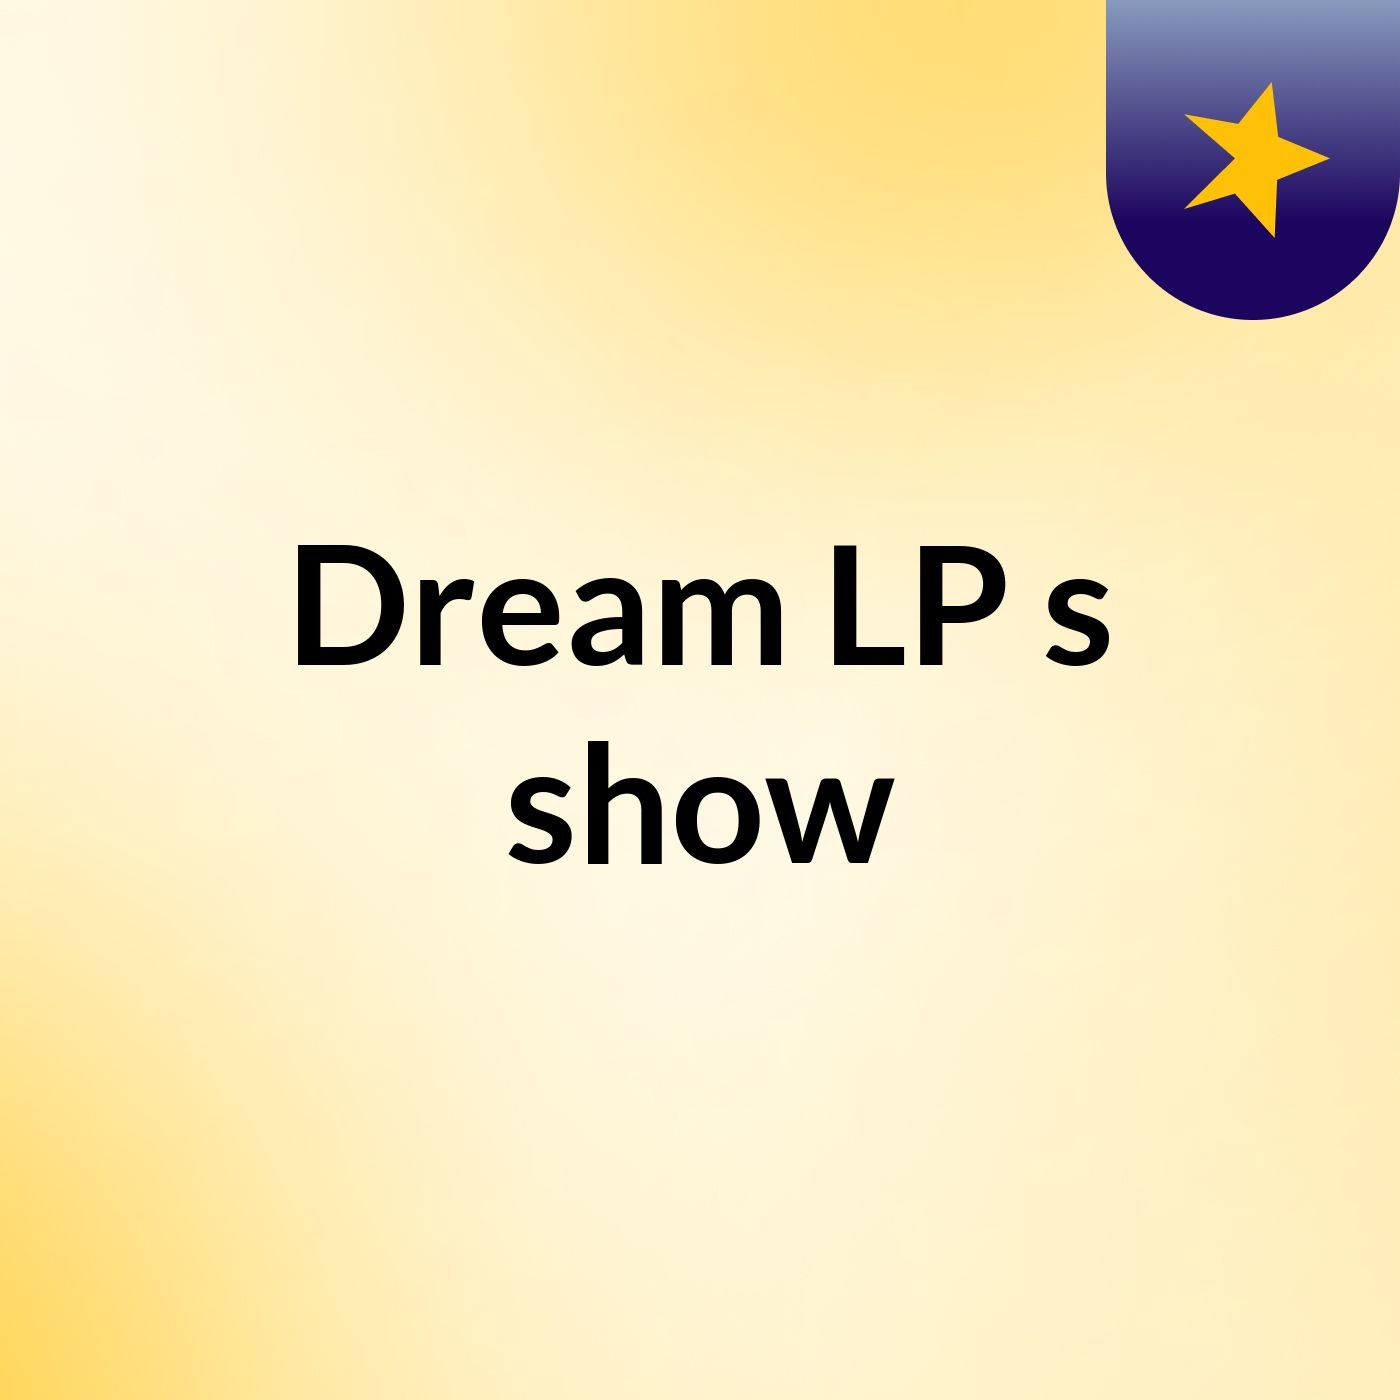 Dream LP's show